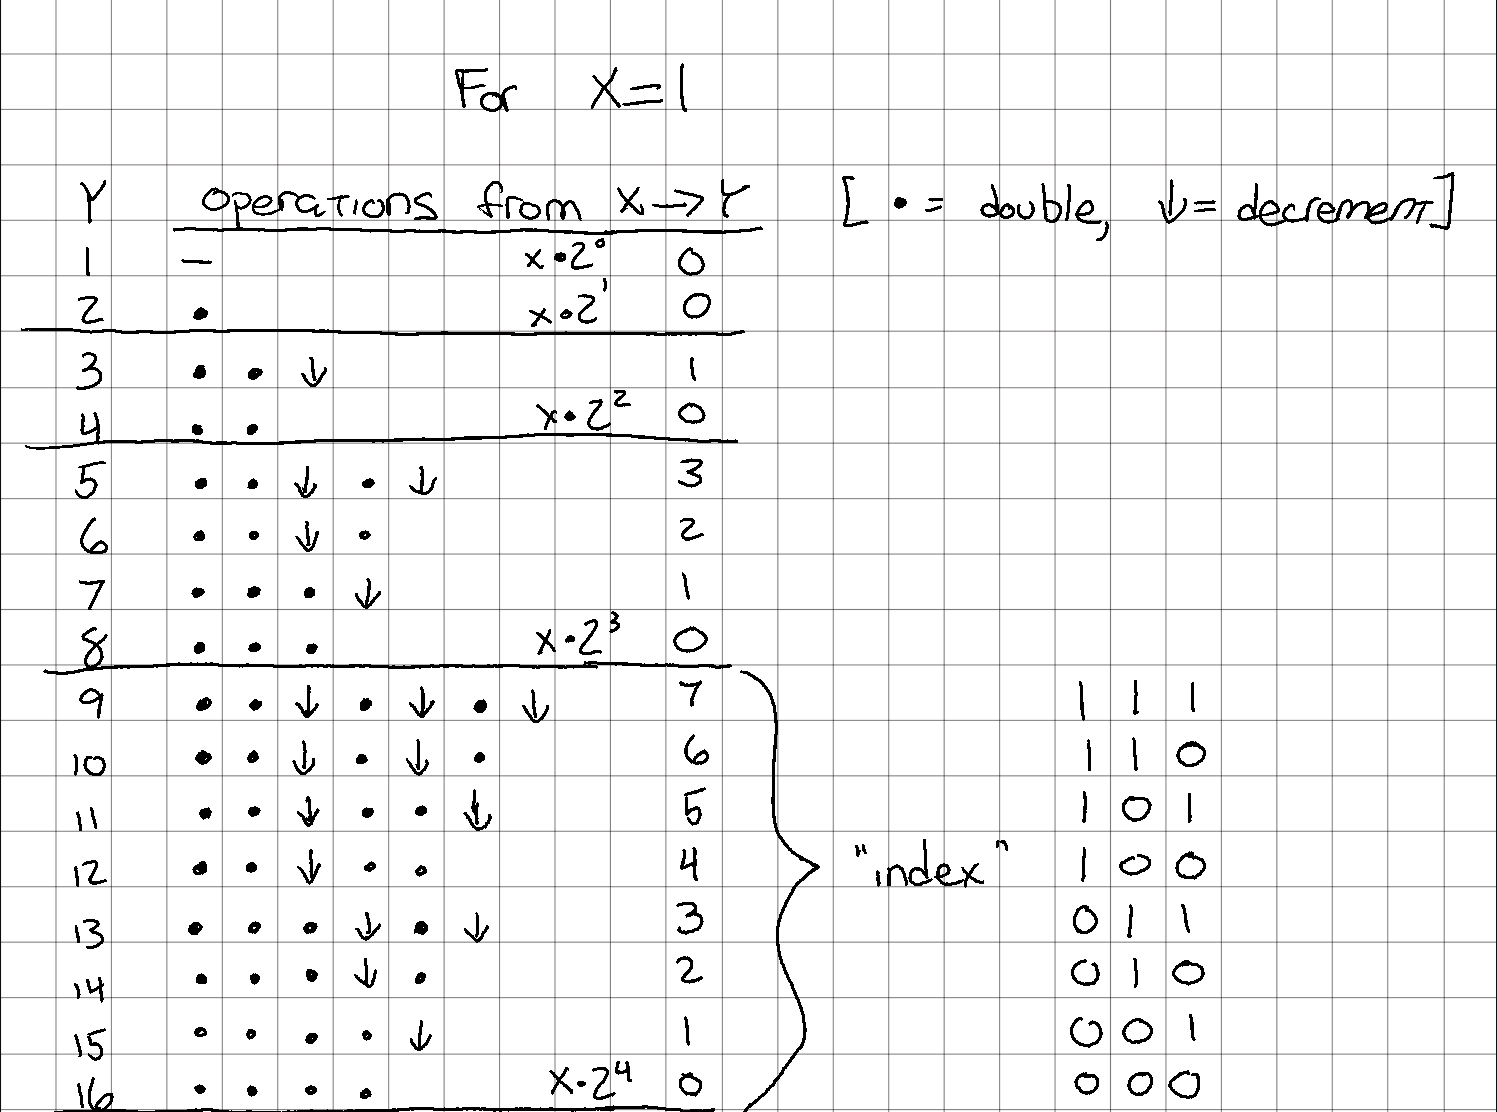 idx of each row, in binary